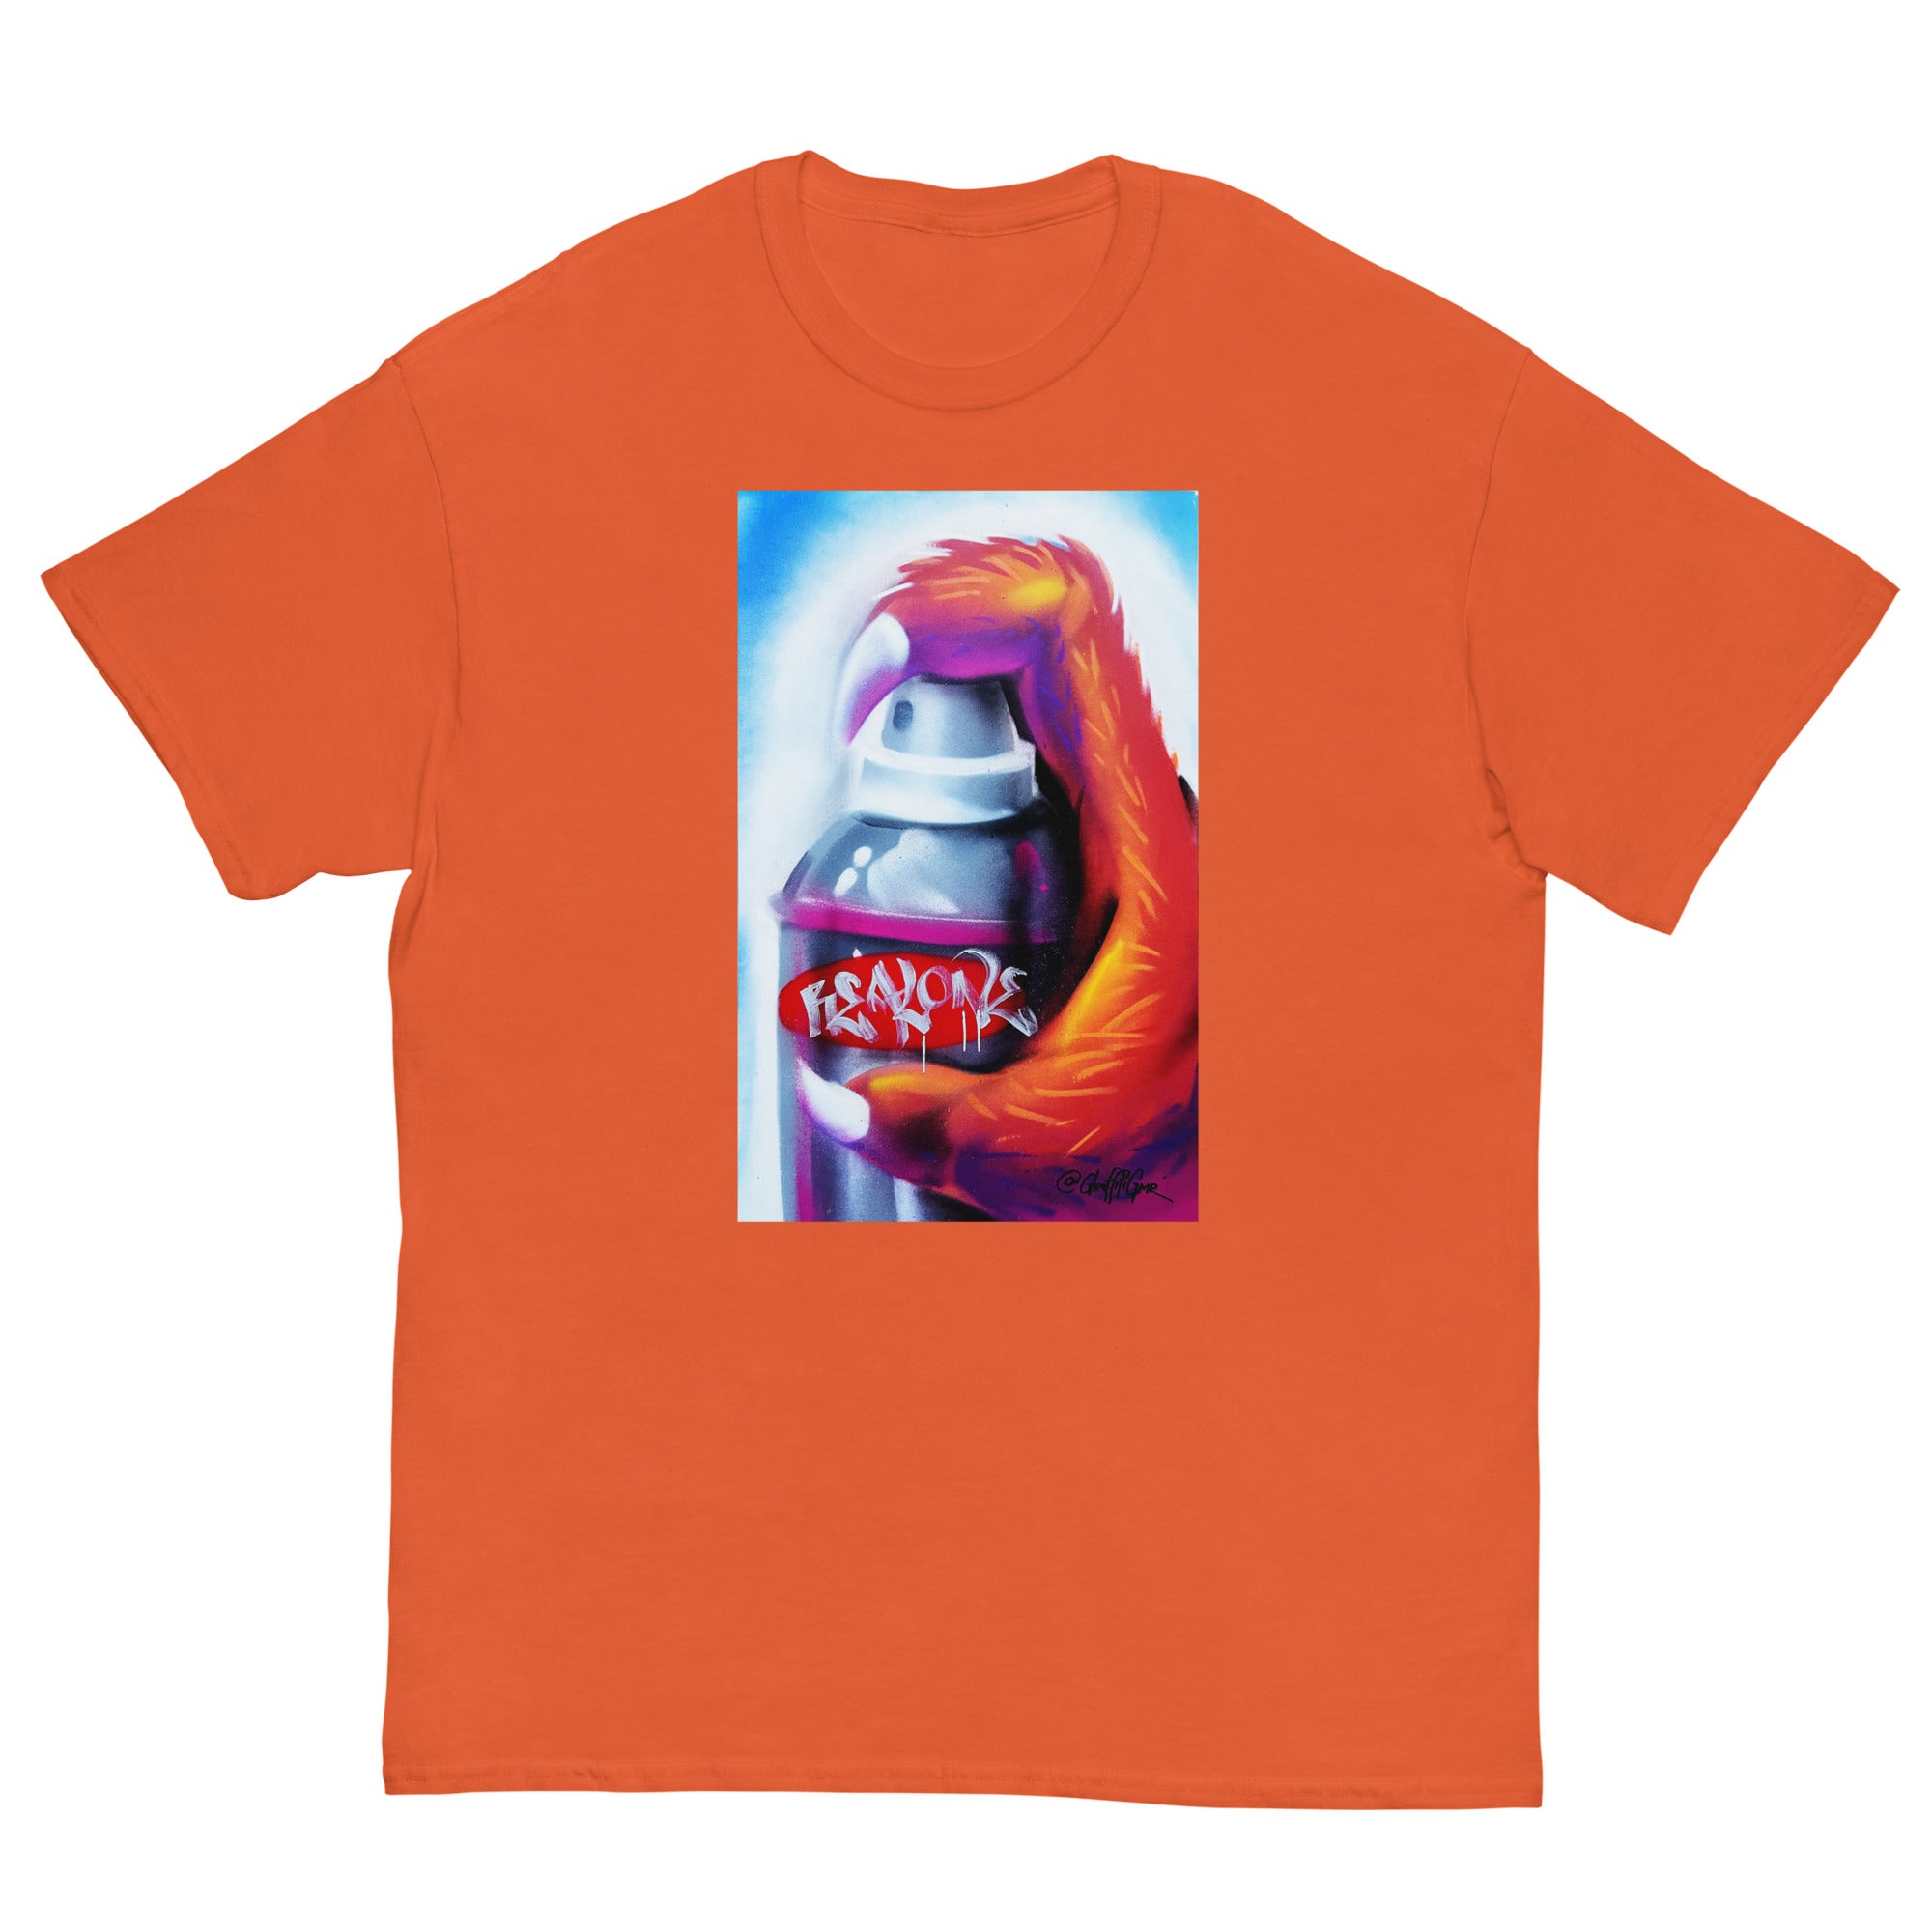 REAL ONES - Men's Classic T-Shirt